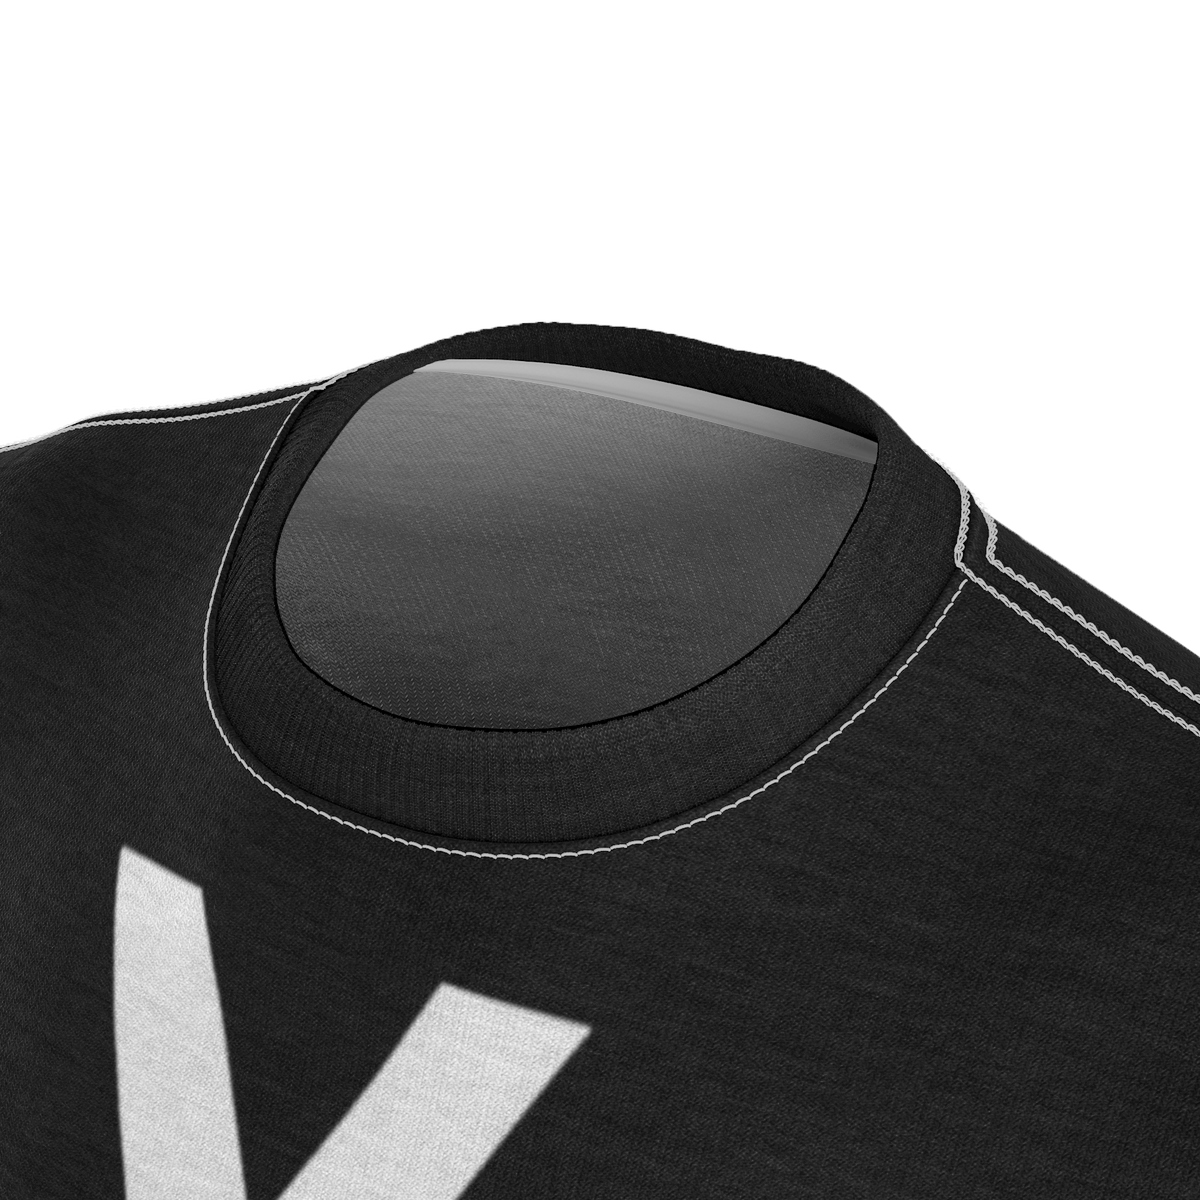 Adidas Yeezy Boost Low Shirt | Tyrant Yeezy Rant V1